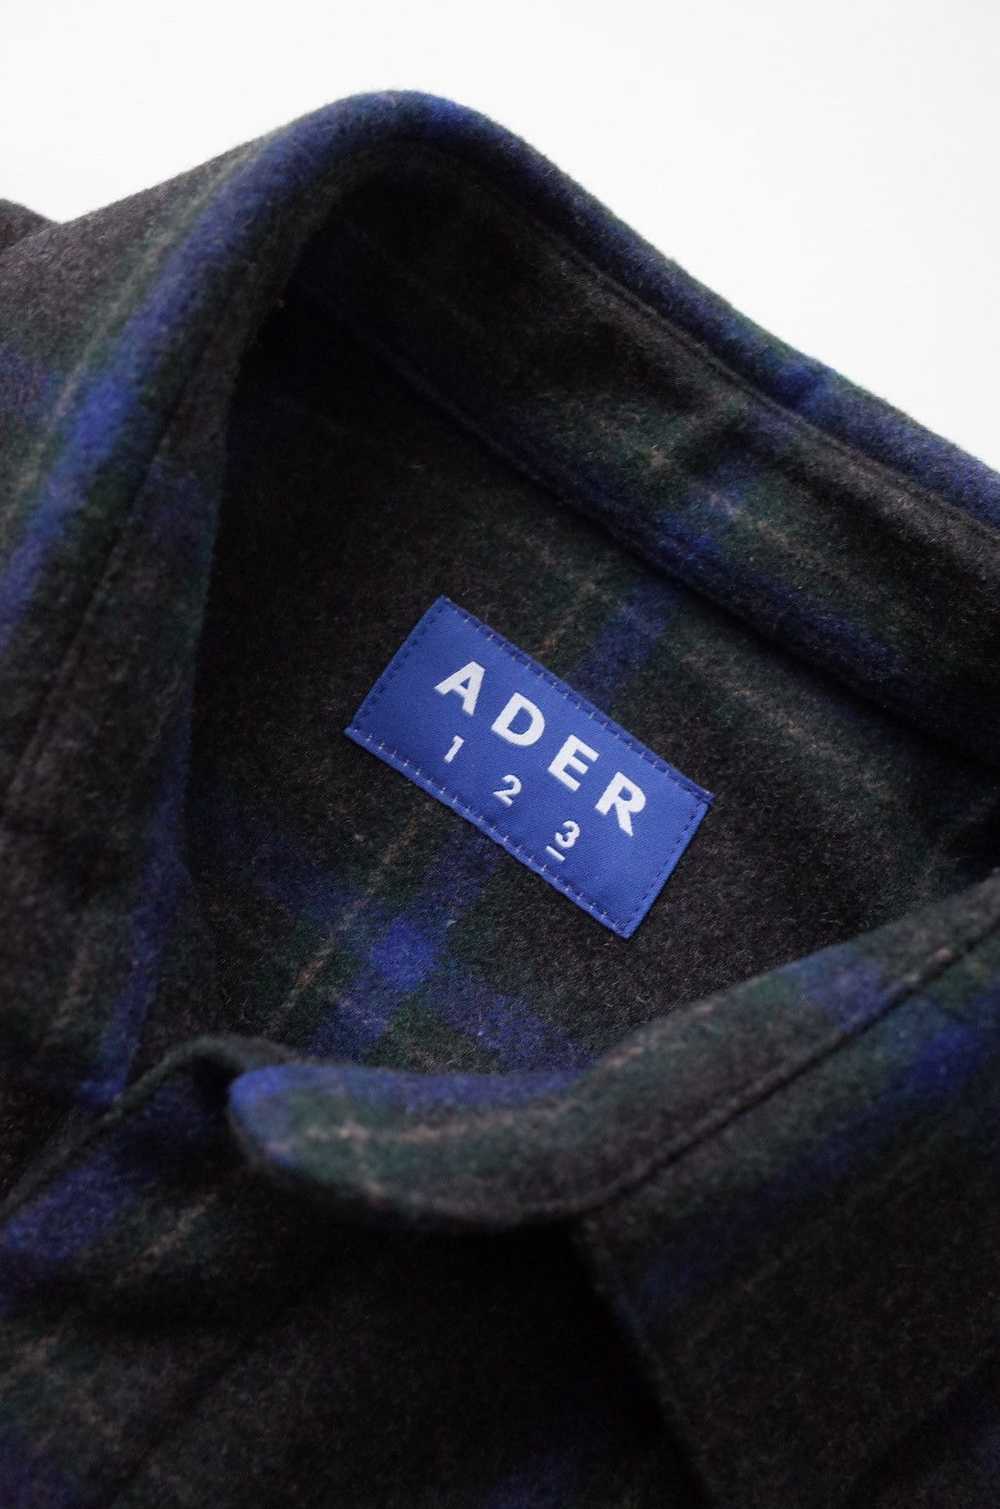 Ader Error Stain Shirt - image 6